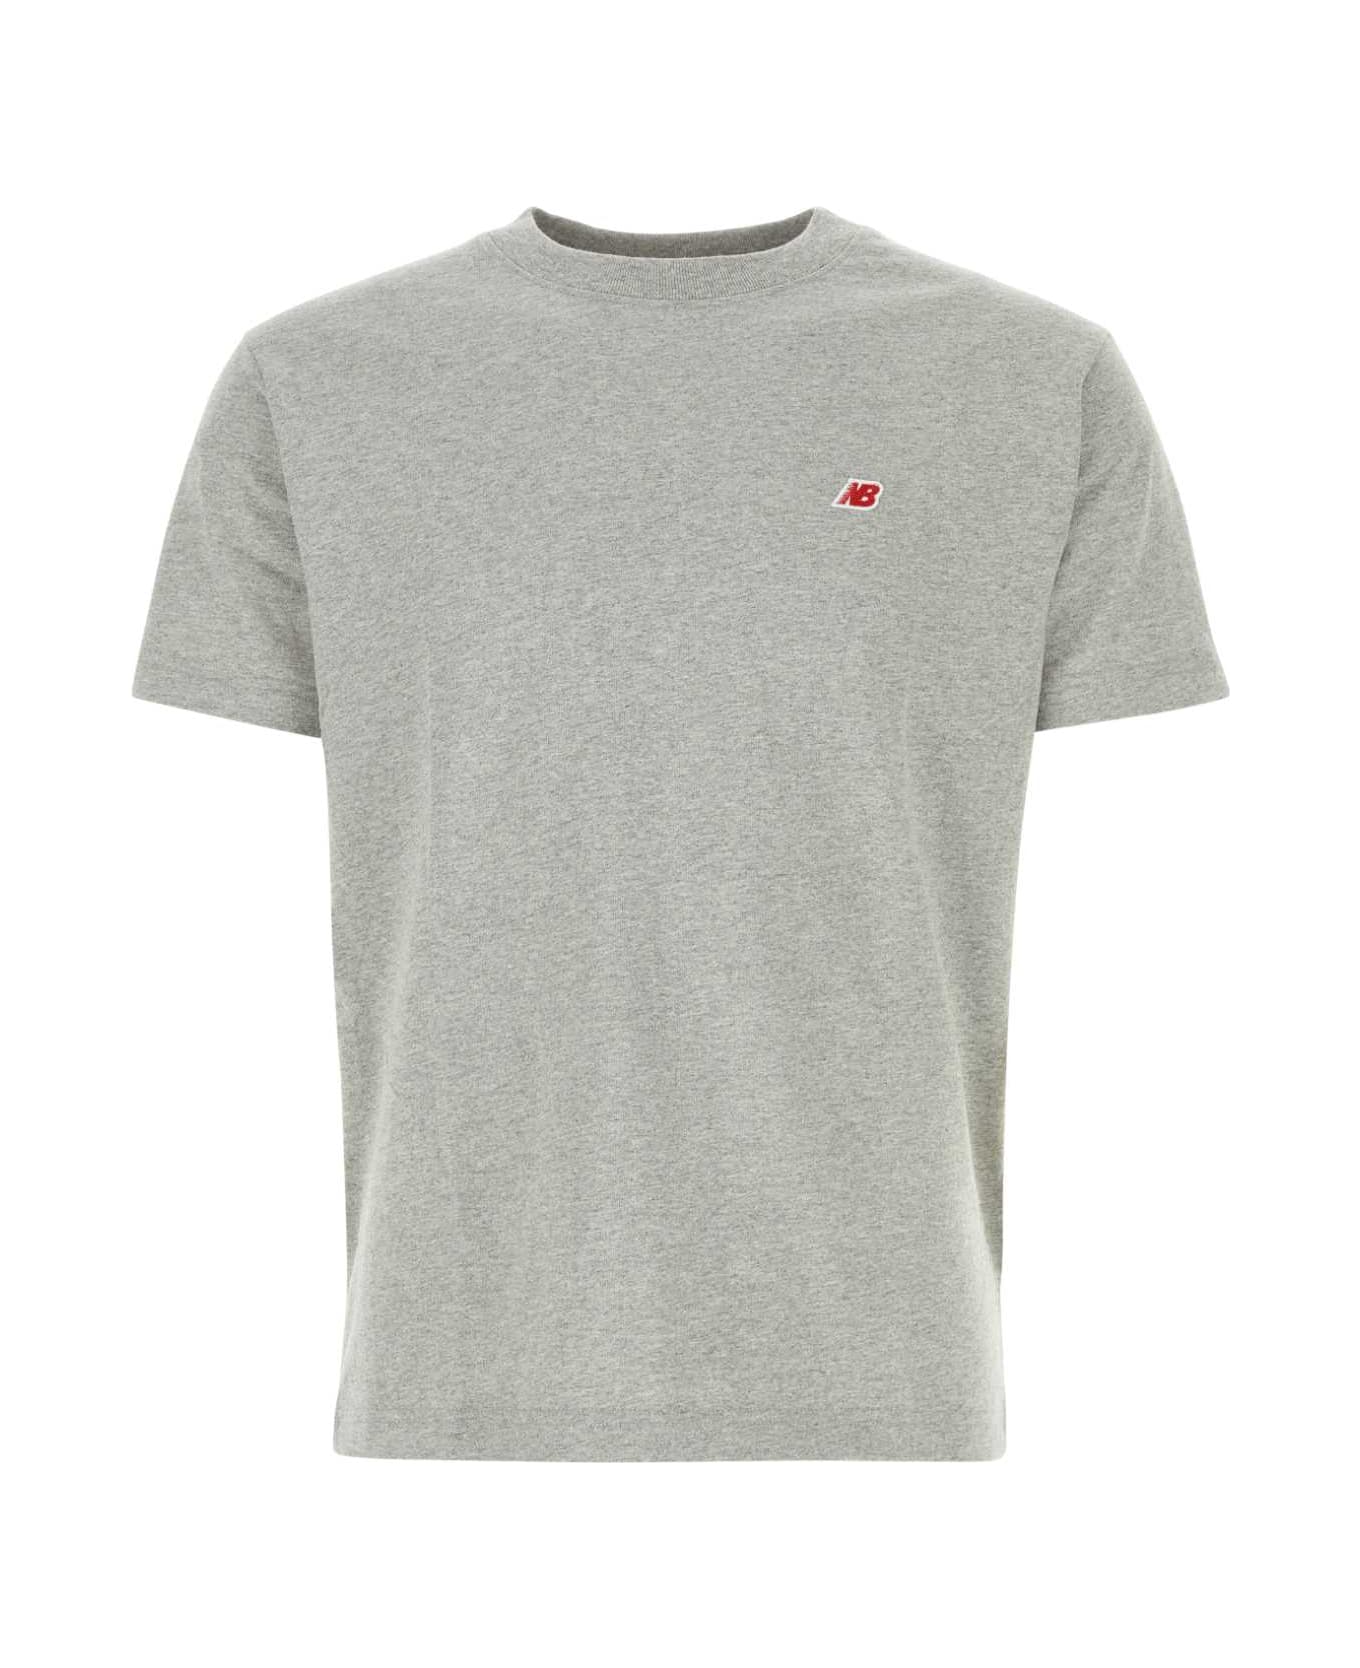 New Balance Grey Cotton Blend T-shirt - GREY